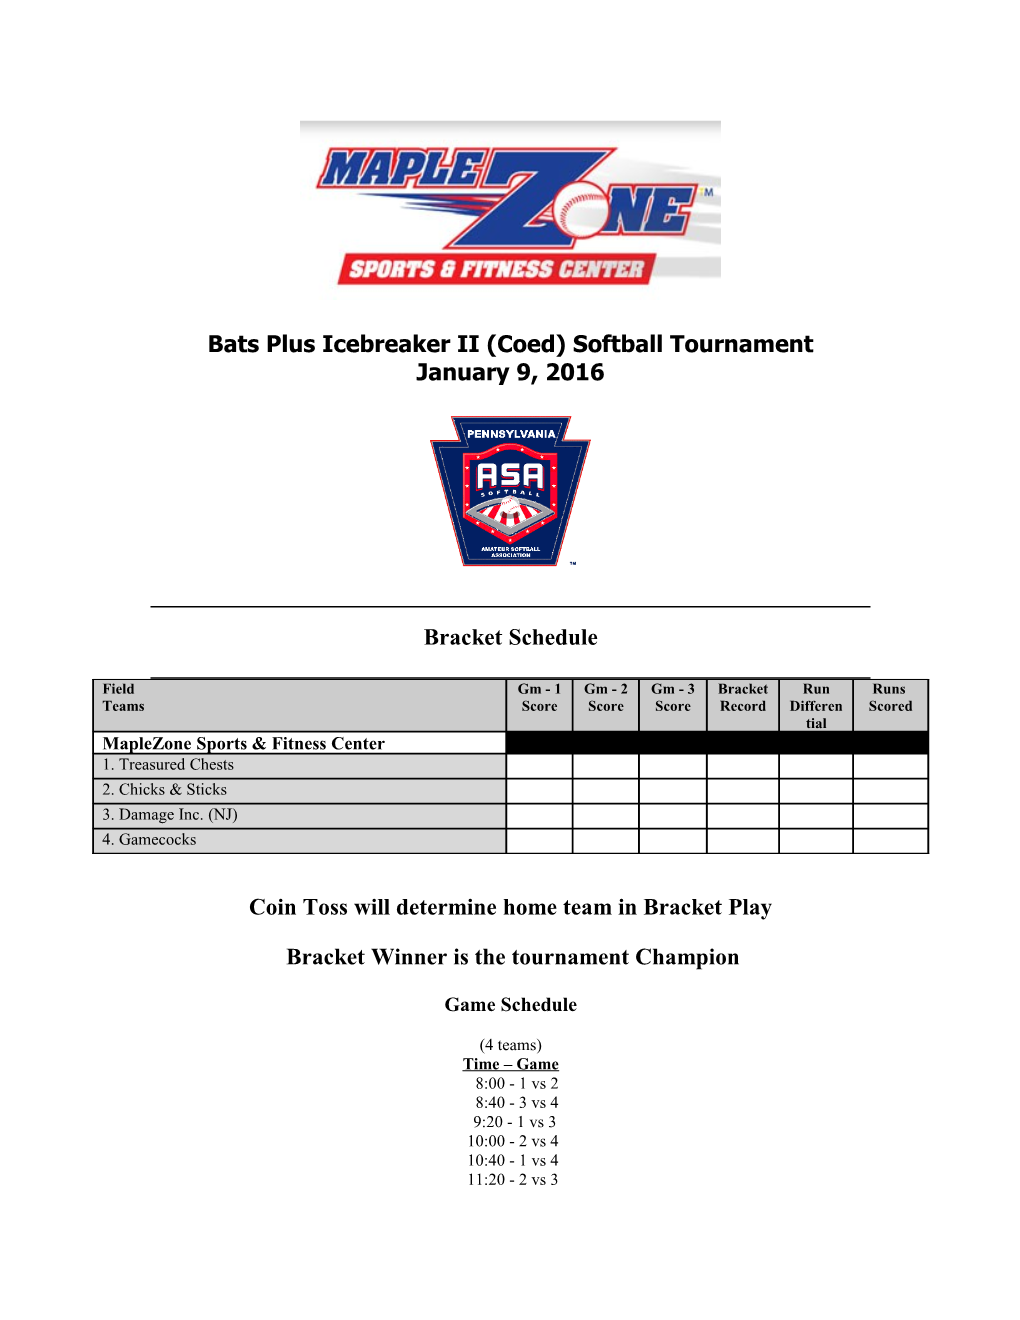 Softball for a Cure Coed Softball Tournament s1